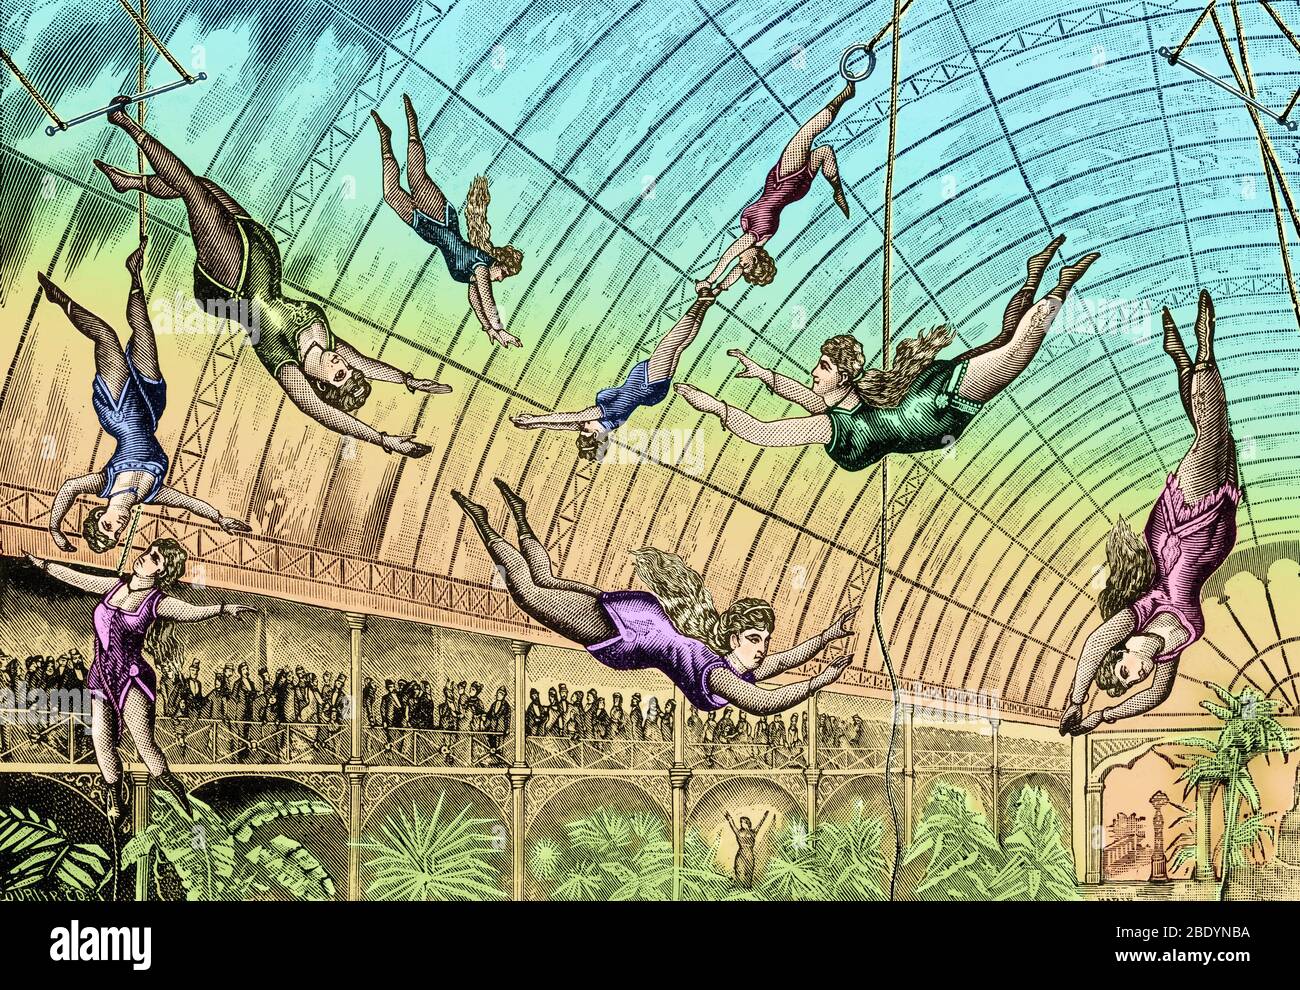 Circus Trapeze Act, 1890s Stock Photo